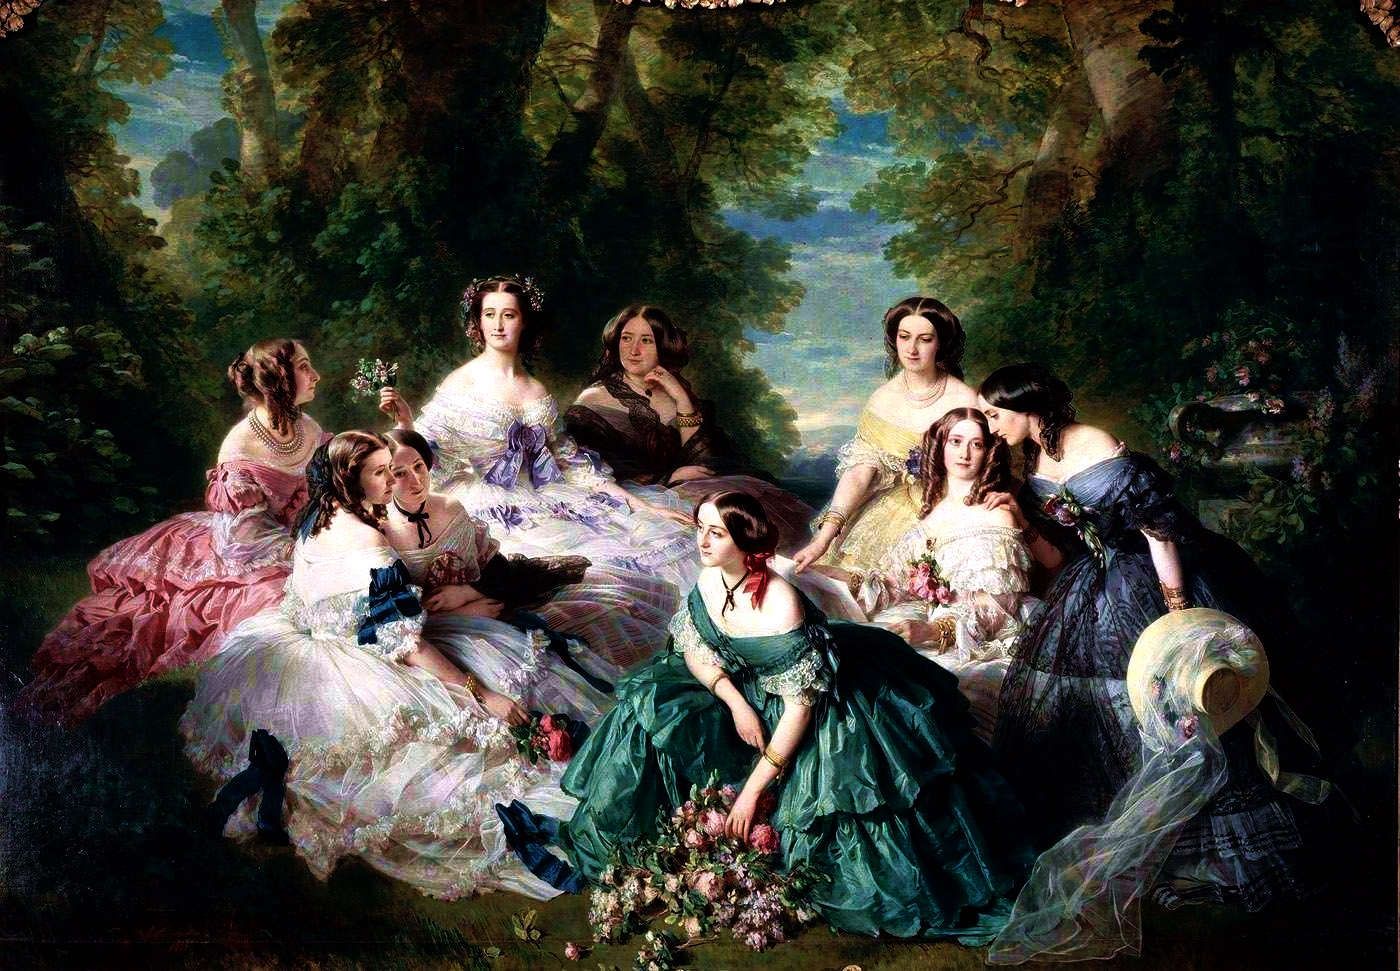 Empress Eugenie surrounded by her ladies-in-waiting, Franz Xaver Winterhalter, 1855